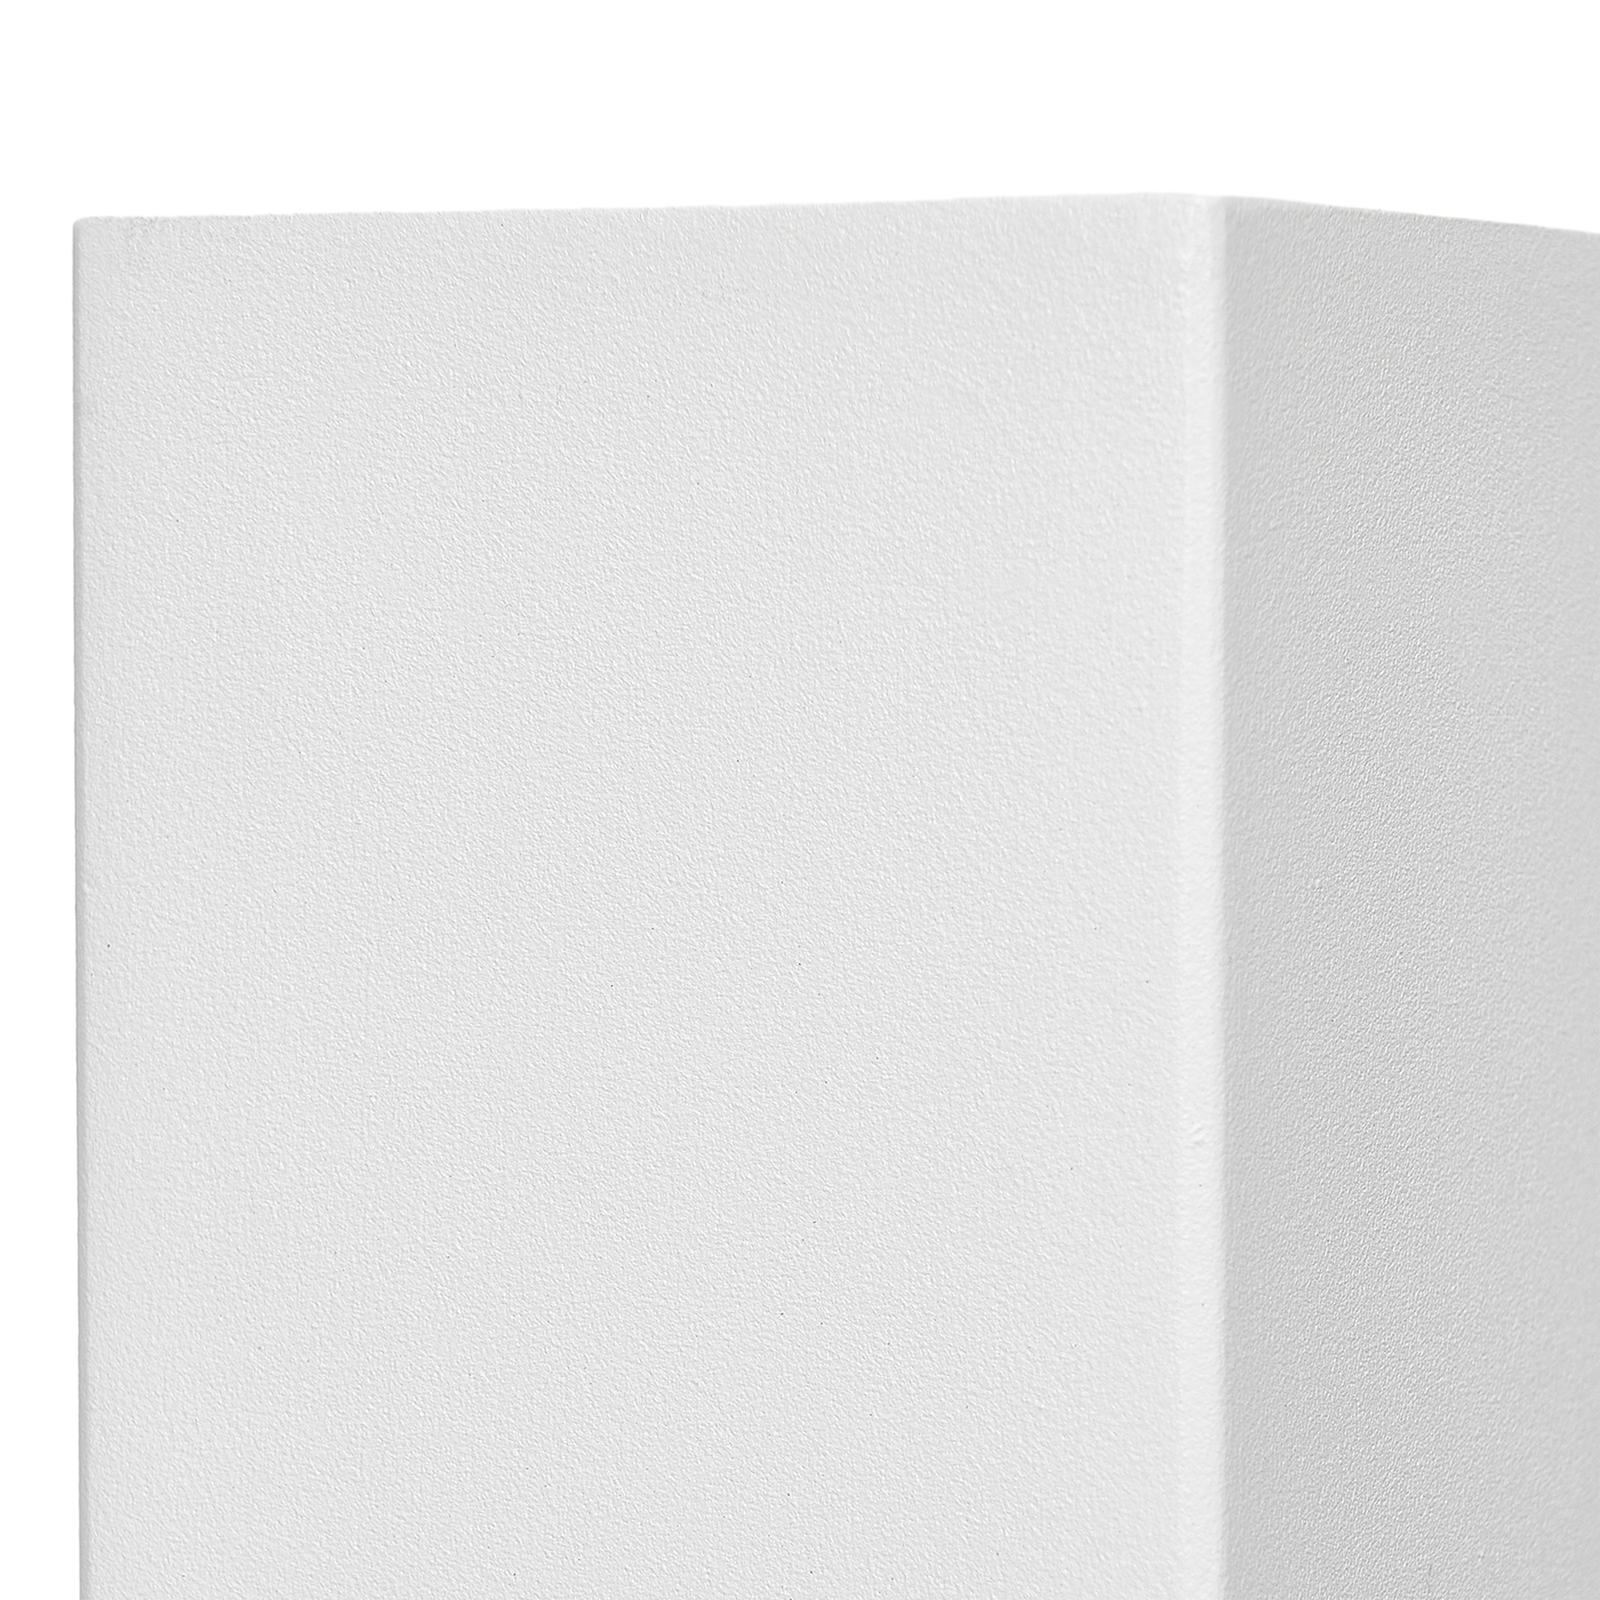 Prios outdoor wall light Tetje, white, angular, 16 cm